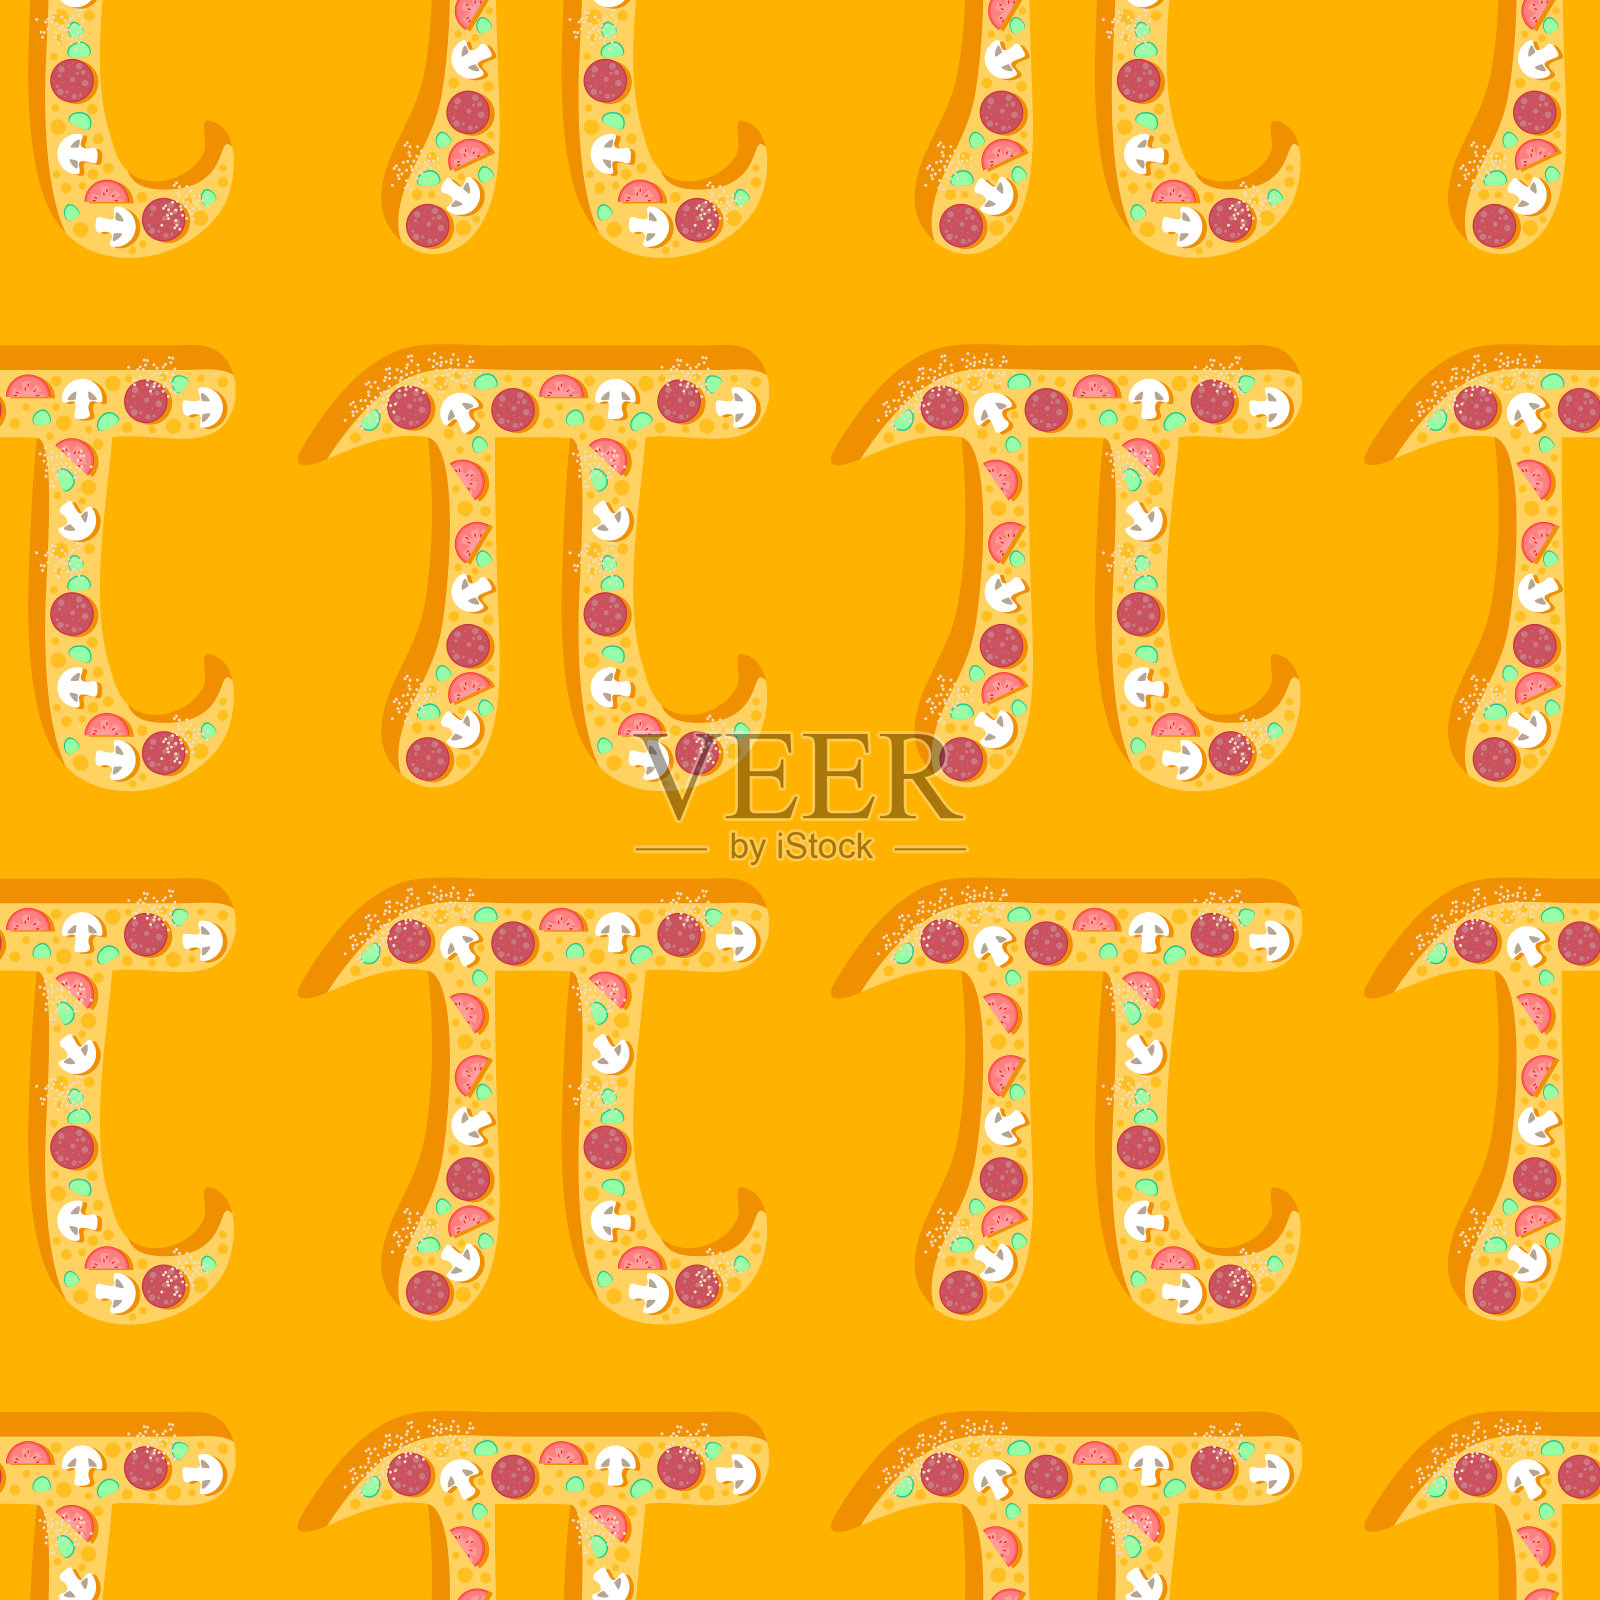 π的一天快乐!庆祝π的一天。数学常数。3月14日(3/14)。圆的周长与直径之比。常数π。披萨。无缝模式插画图片素材